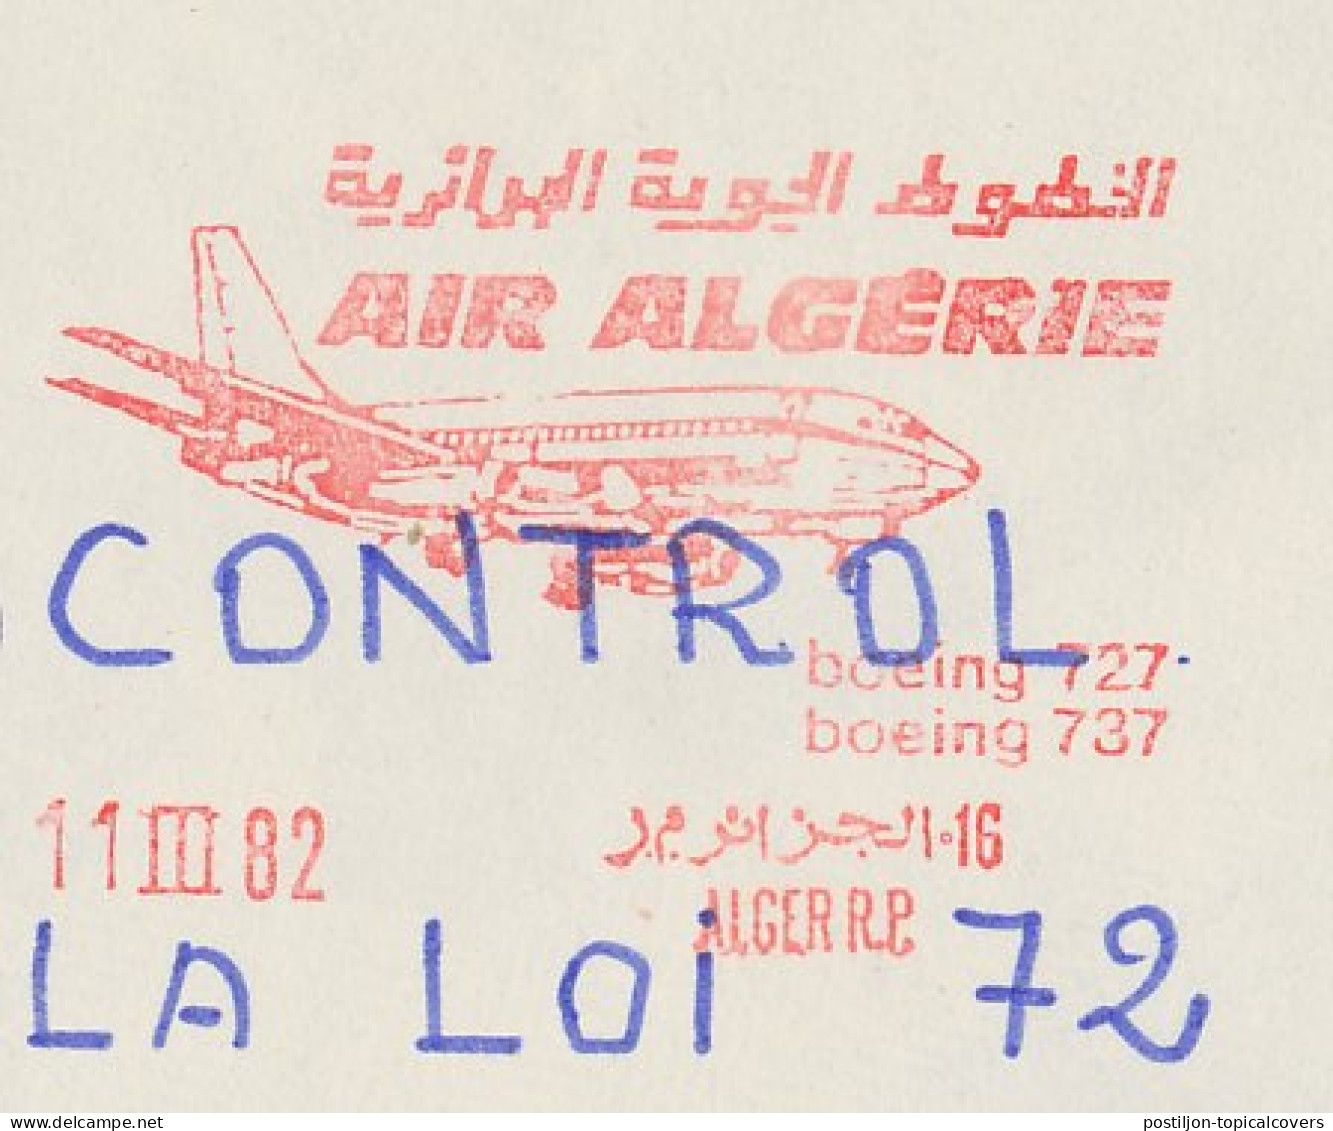 Meter Cover Algeria 1982 Air Algerie - Airplane - Airline - Airplanes